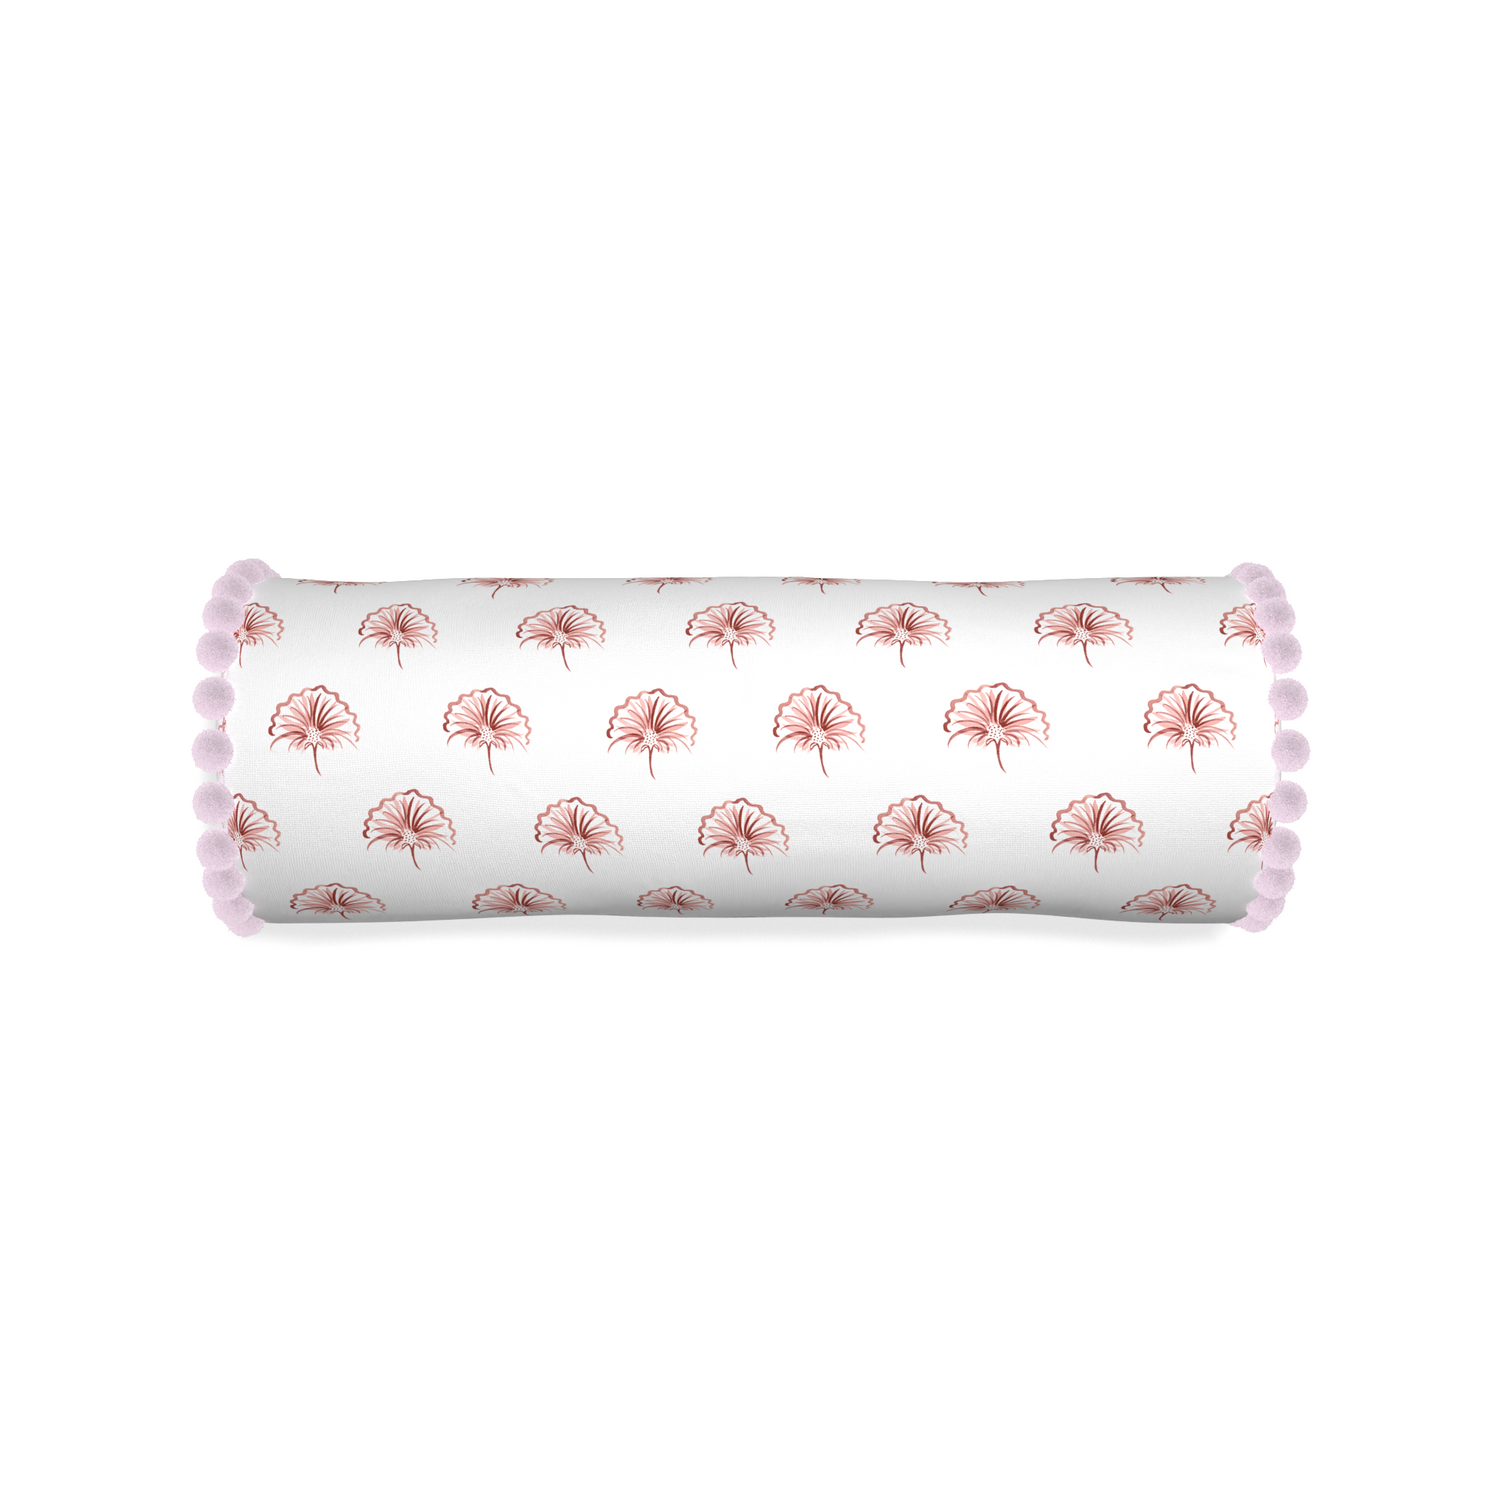 Bolster penelope rose custom pillow with l on white background